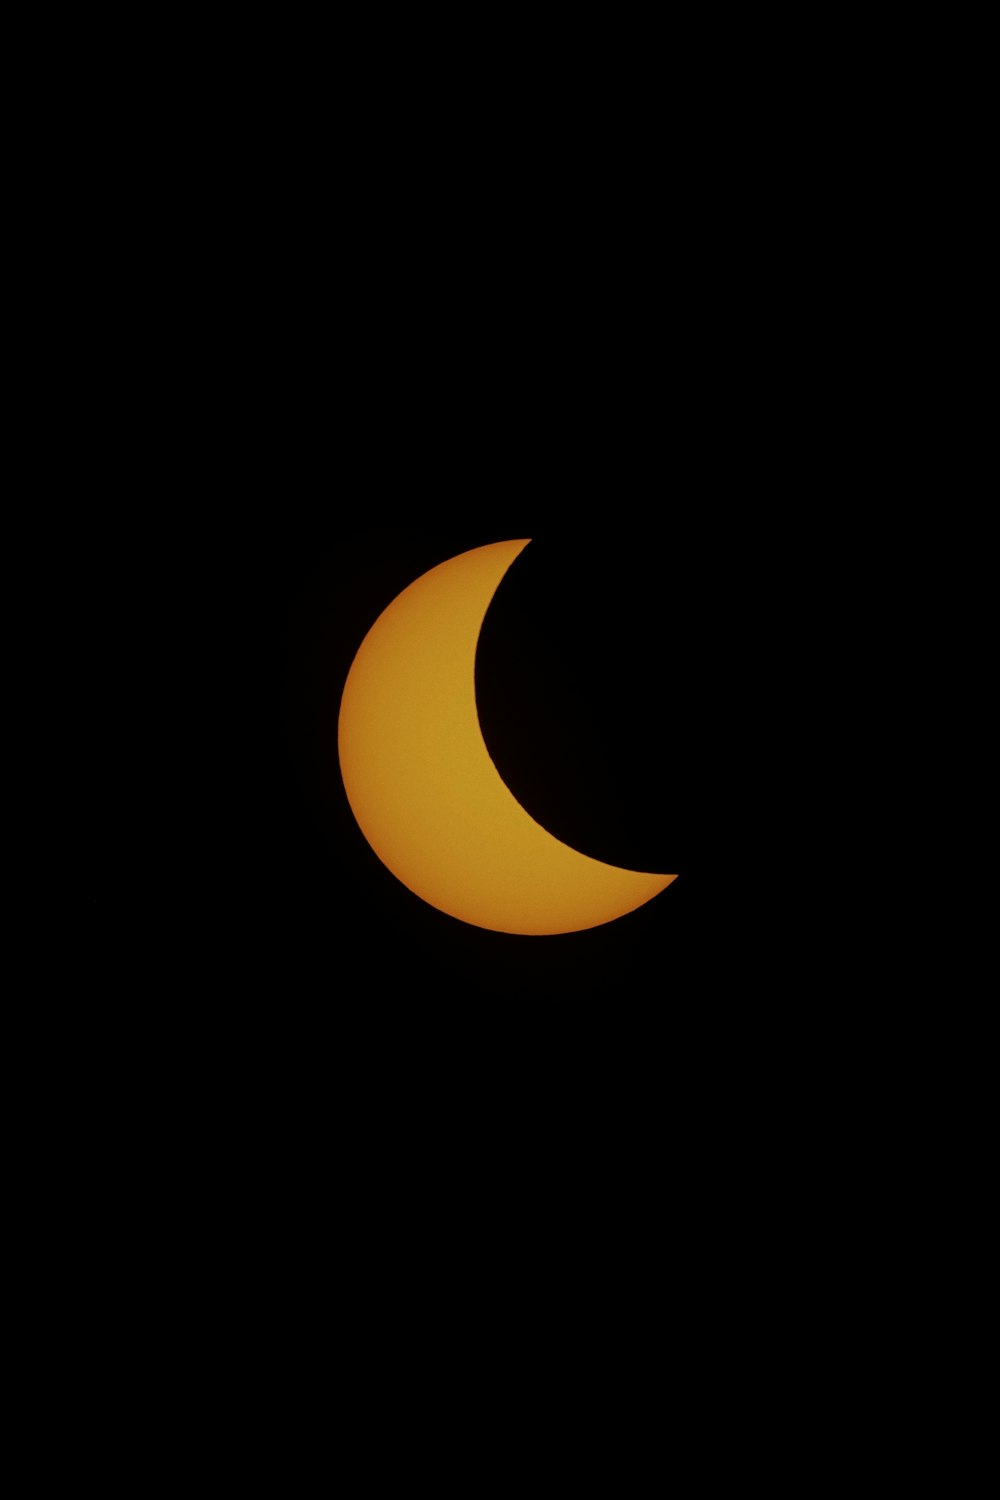 a partial solar eclipse in the dark sky